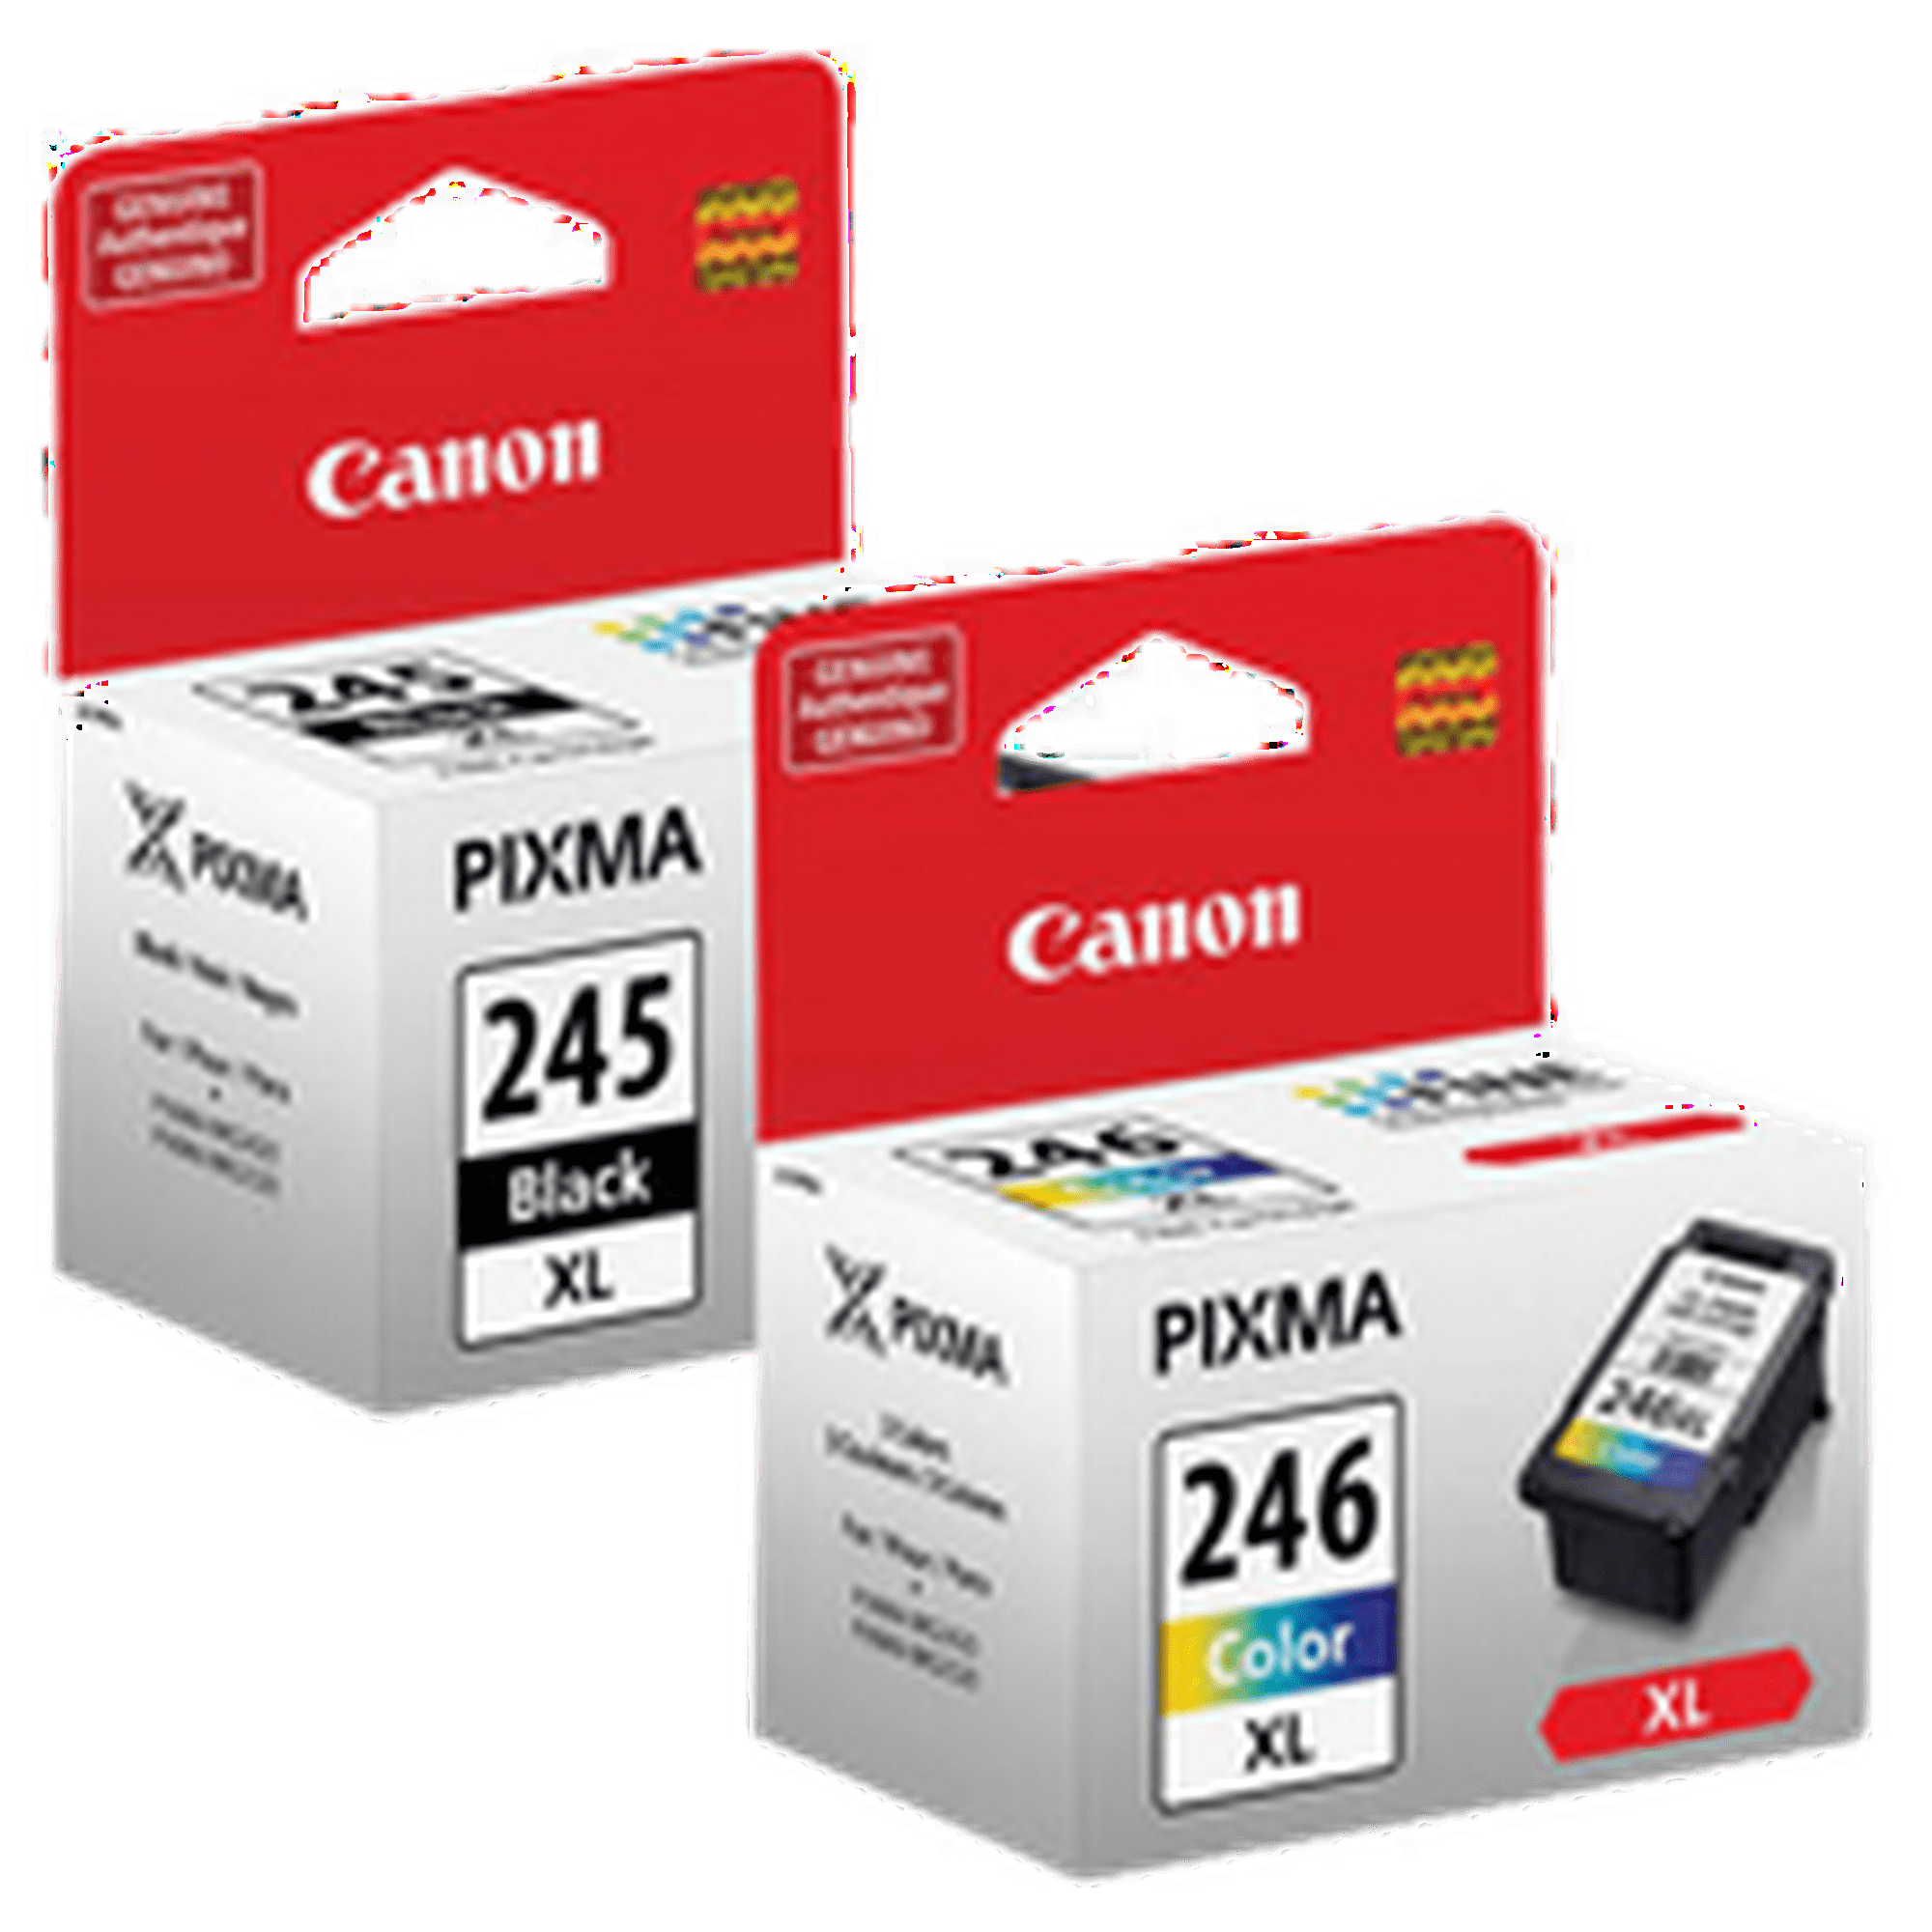 Canon mg2500 series. Canon mg2500 картридж. Canon MG 2500 PIXMA Color Black. Canon mg2500 чернила. Картридж Canon MP 2500.